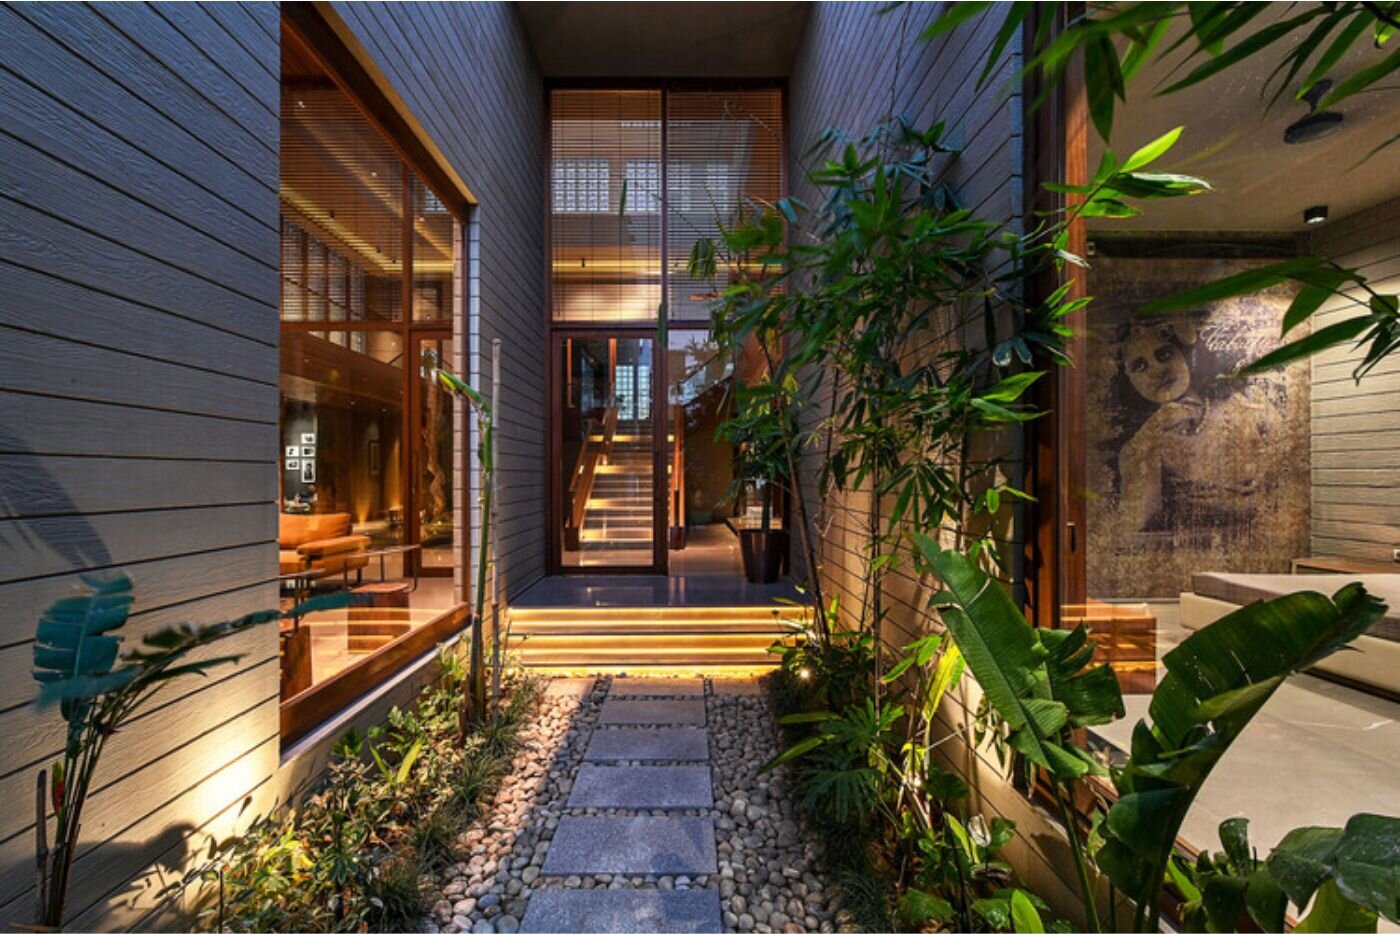 Sanjay-Puri-Architects-Visual-Atelier-8-18-Screens3.jpg